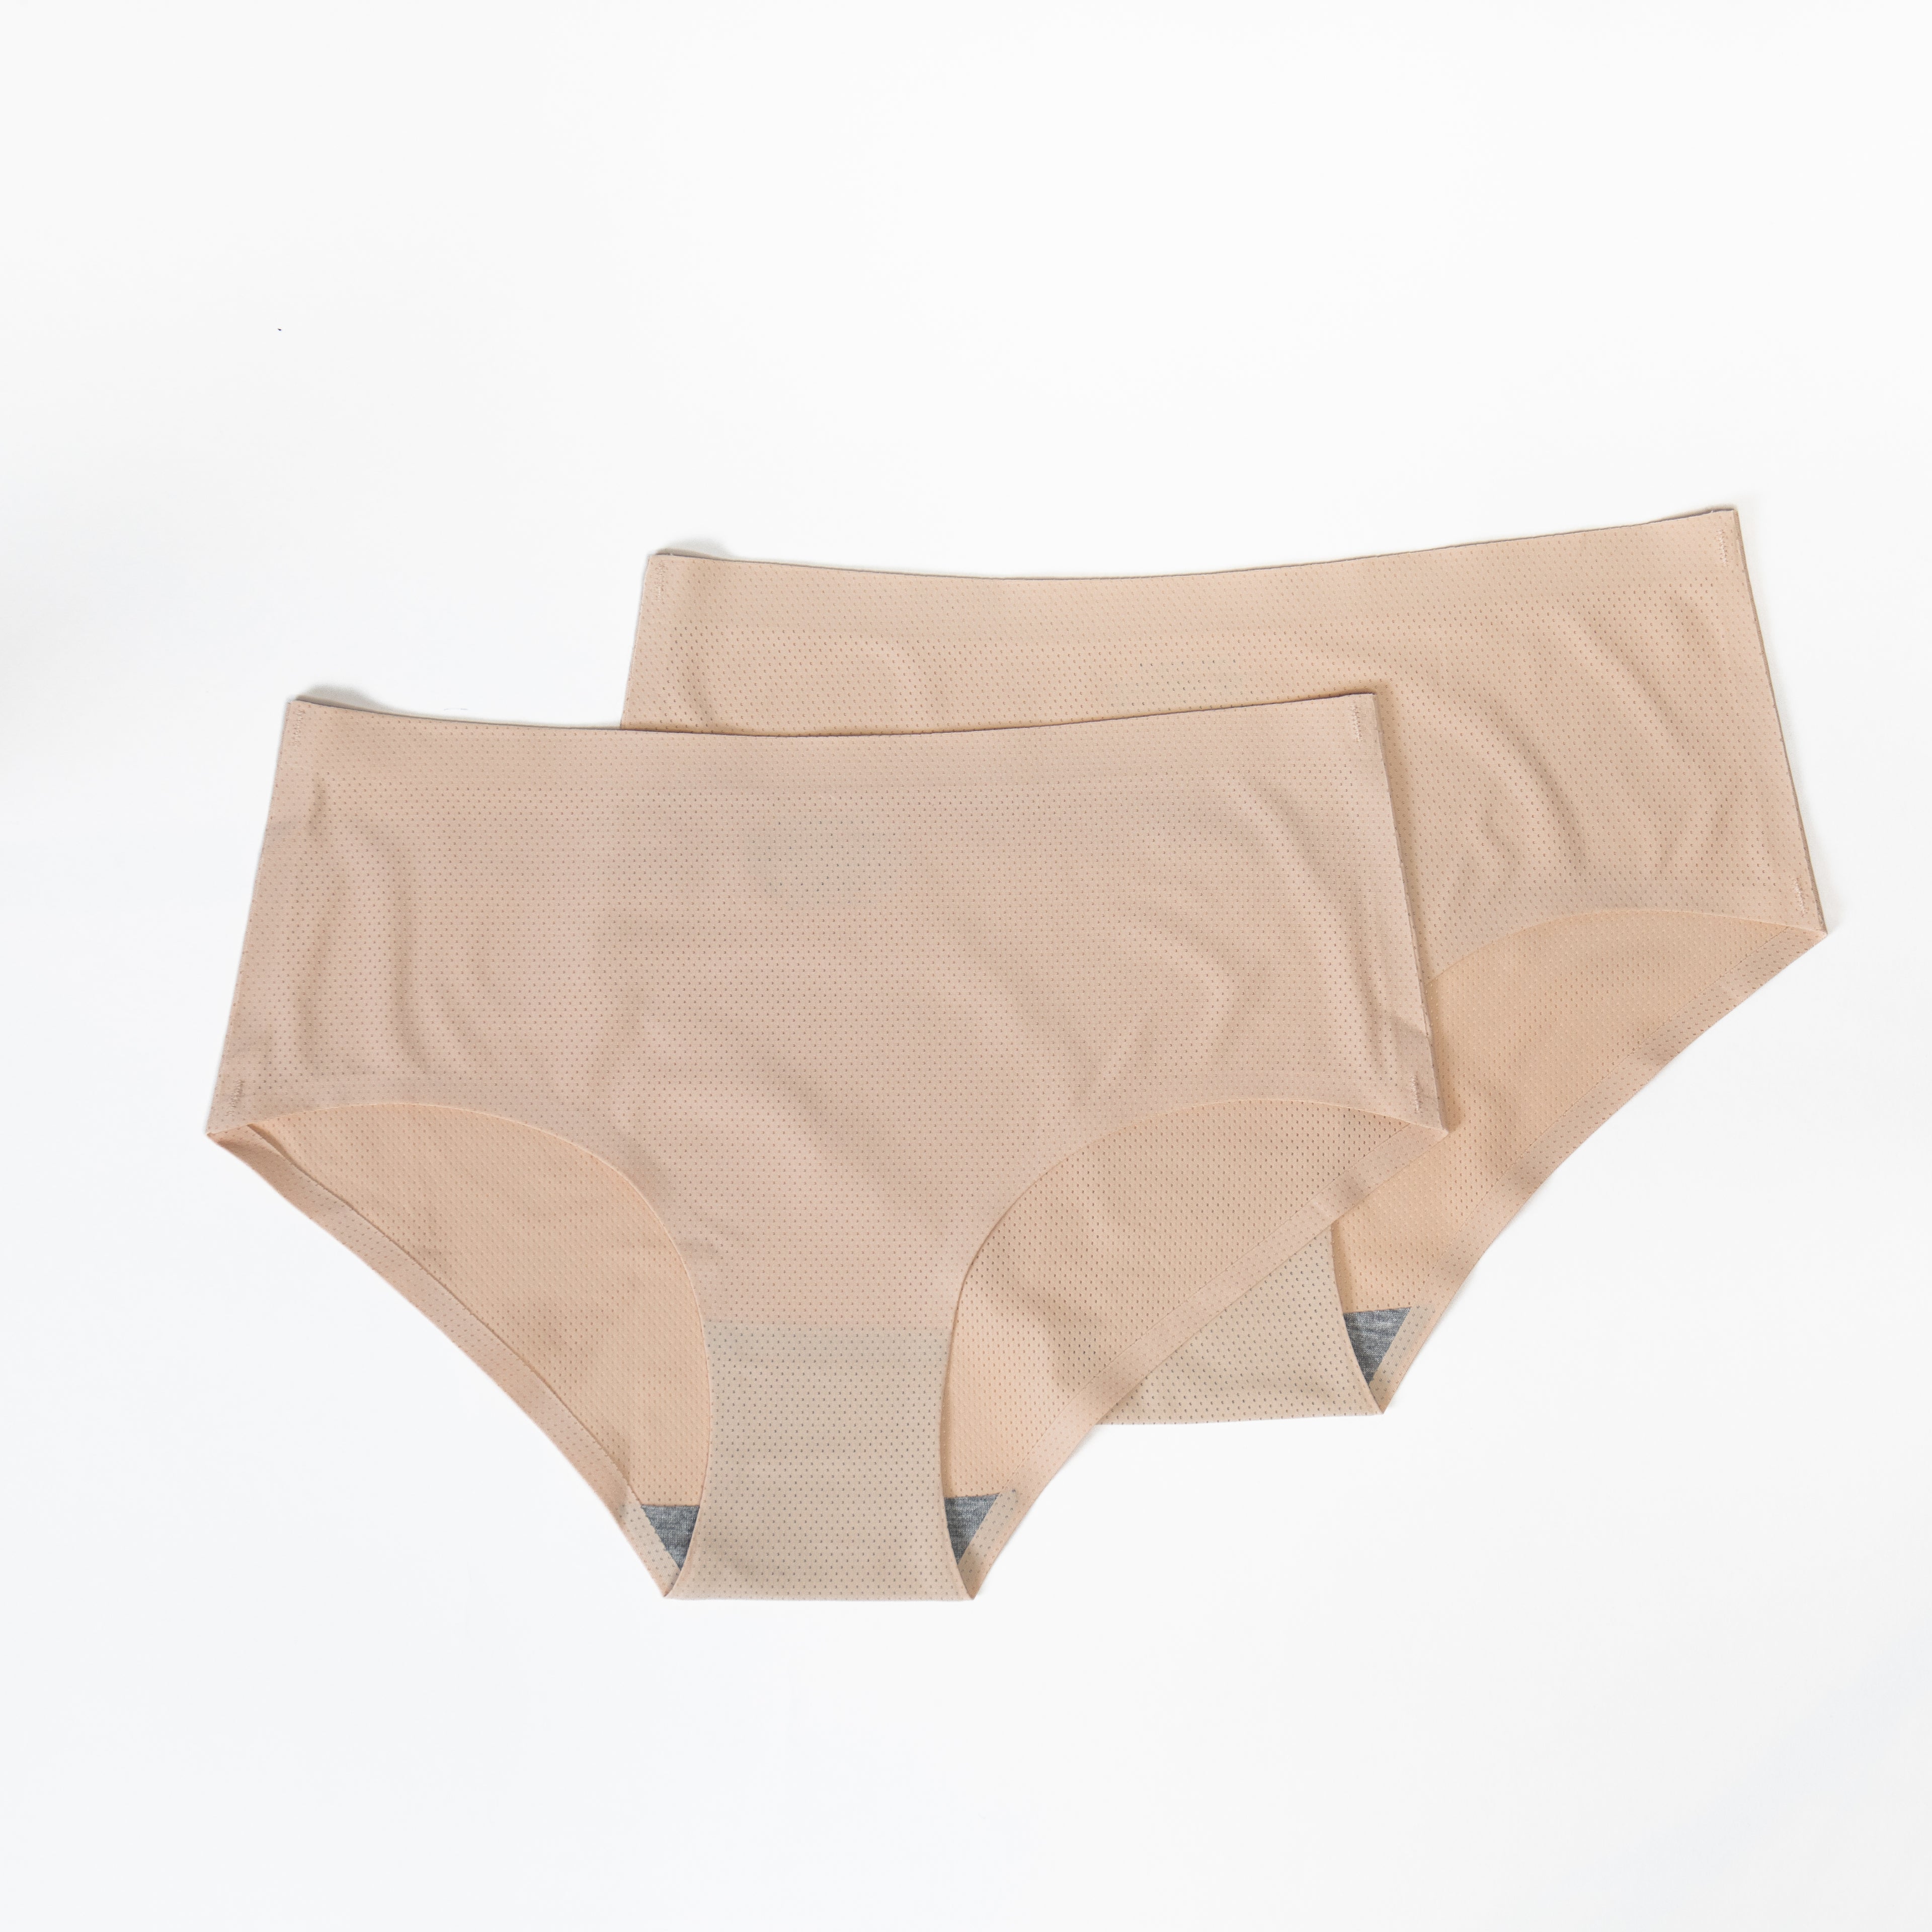 Women's Organic Cotton Bikini Underwear | Women Panties Combo Pack of 3 |  Chemical-free & Spandex-free